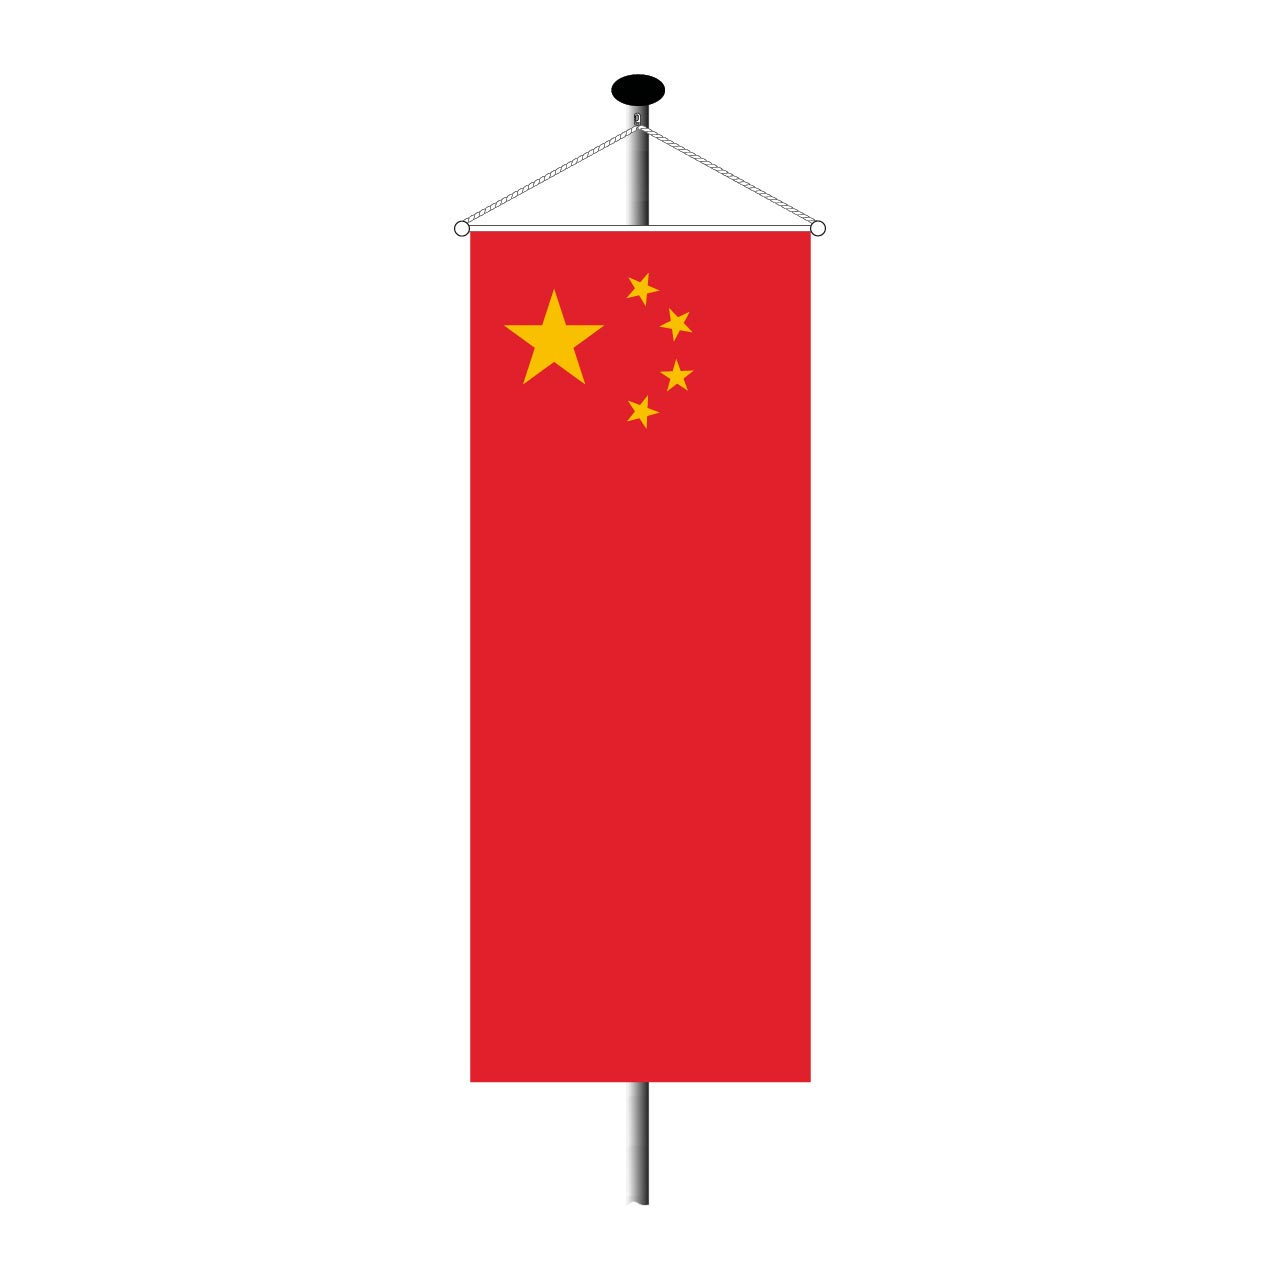 Bannerfahne China